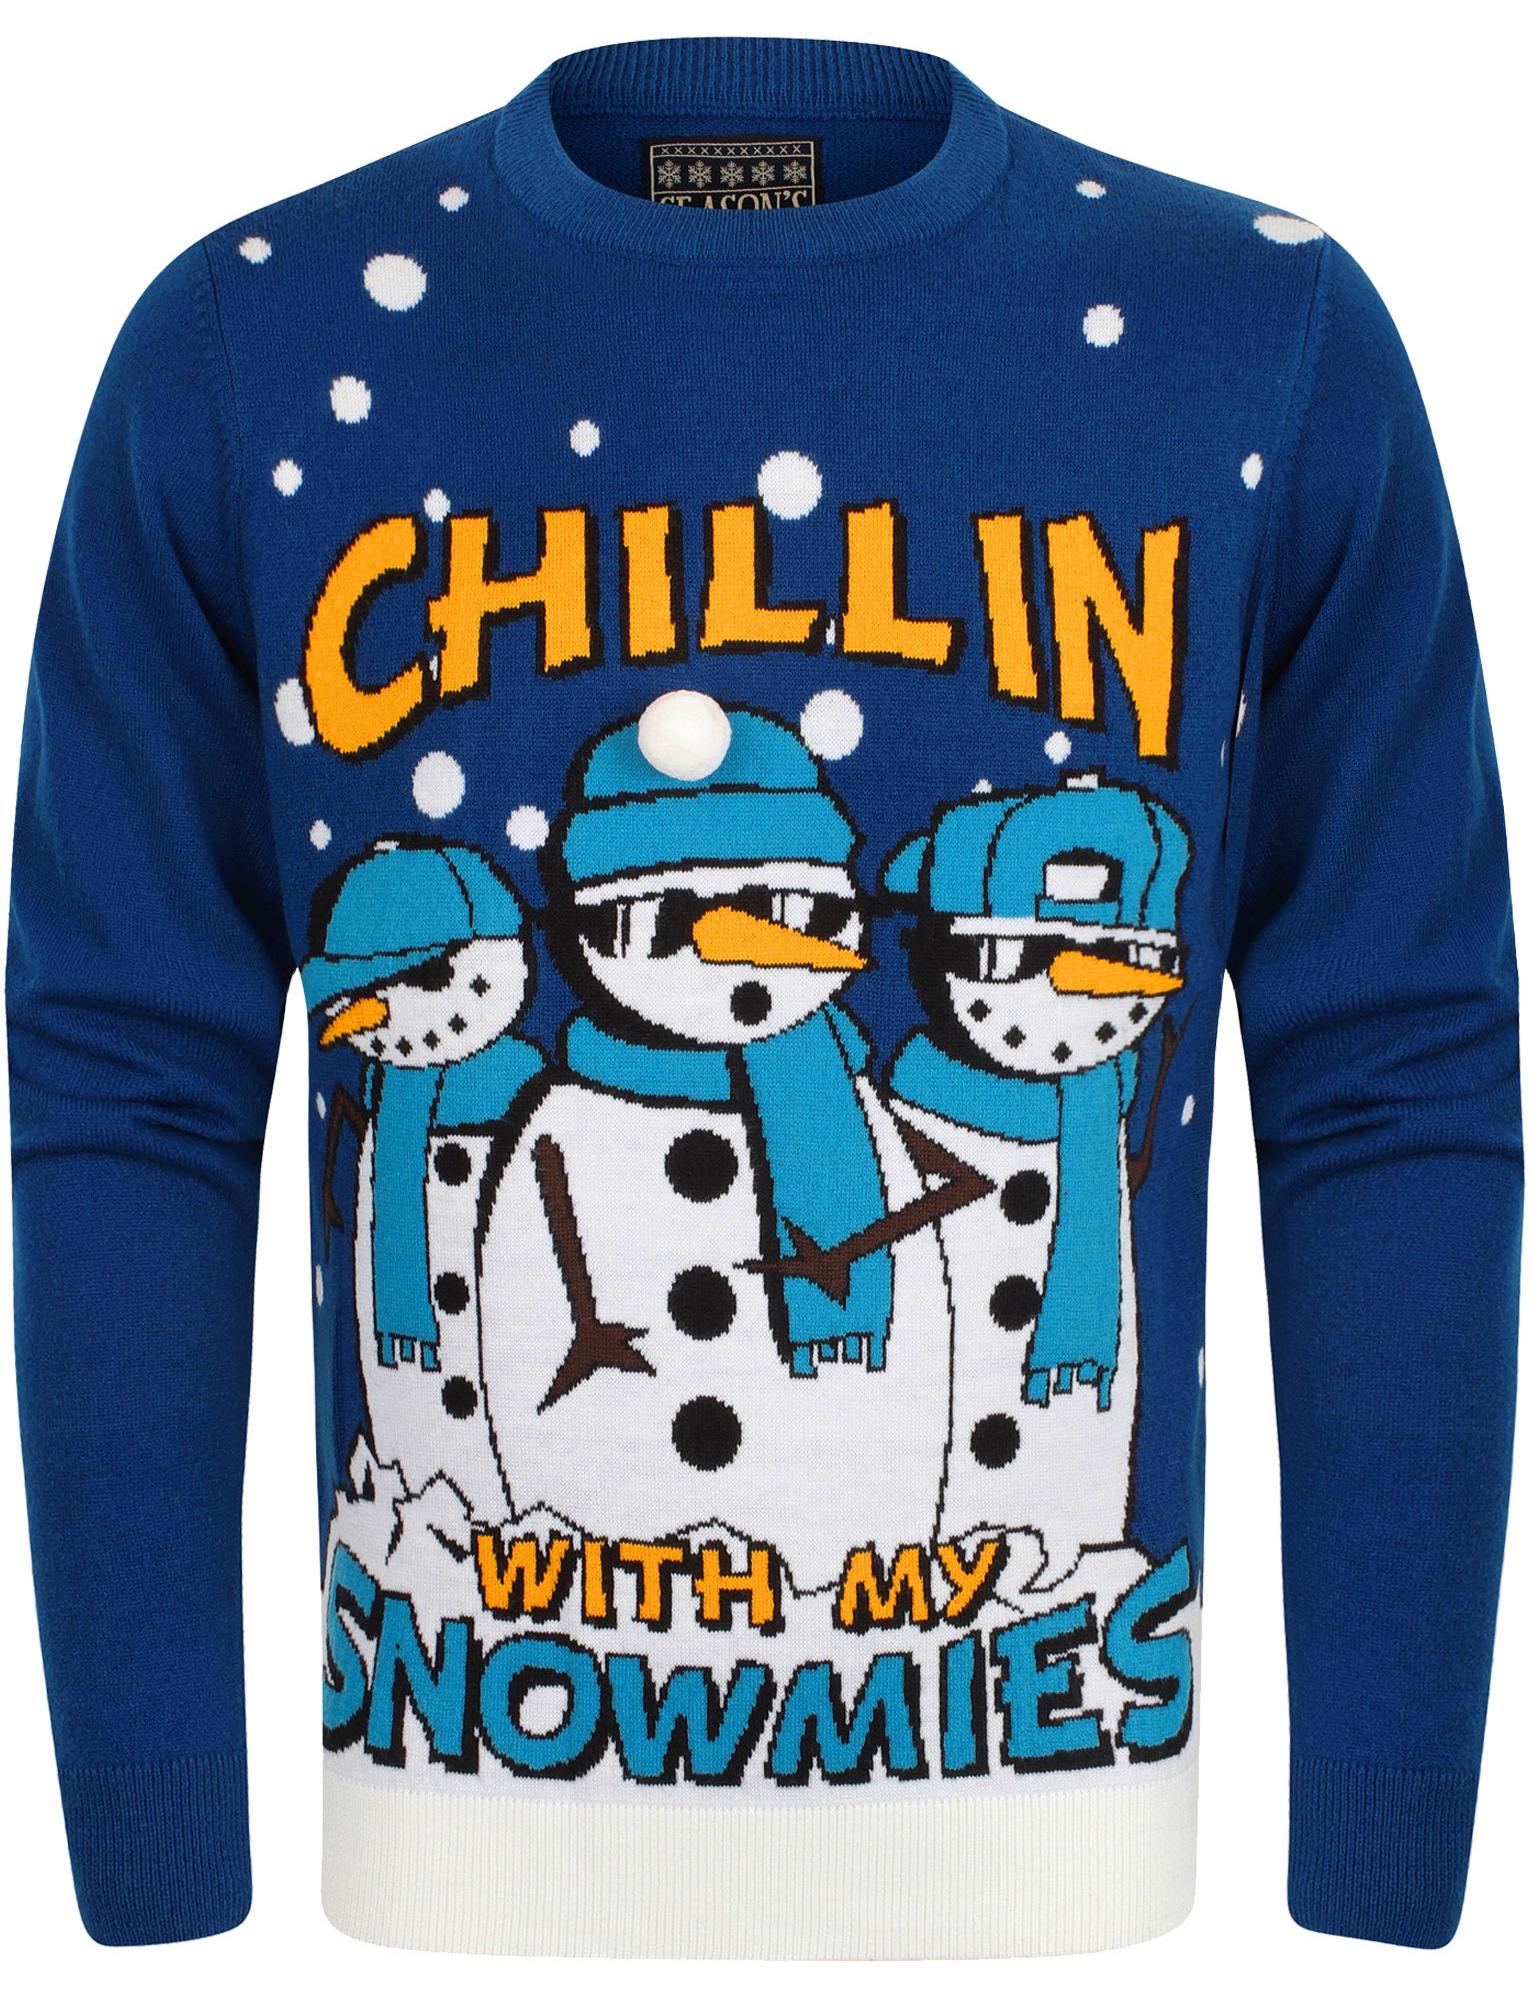 Season S Greetings Men S Snowmies Funny Novelty Christmas Xmas Jumper Sweater Ebay